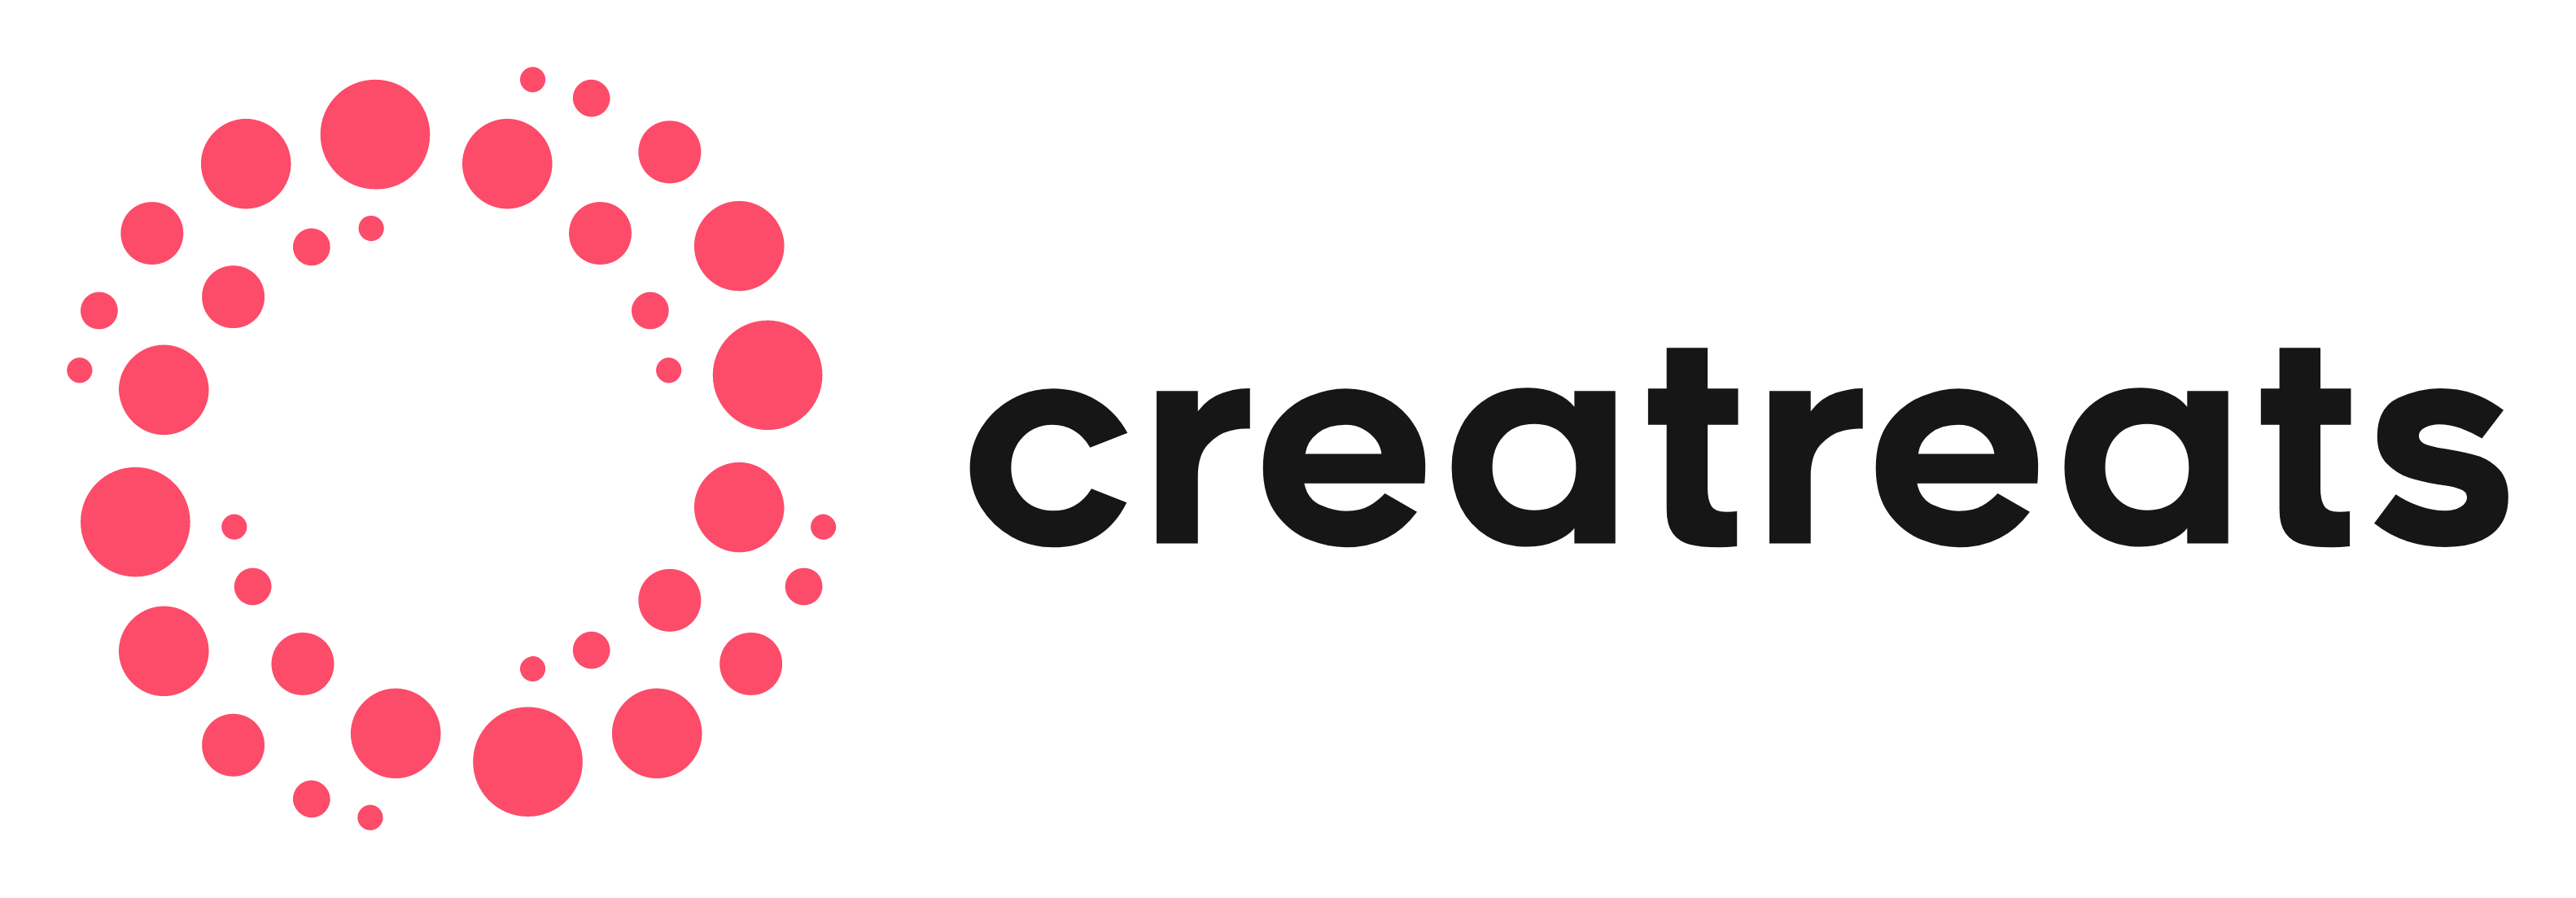 Creatreats